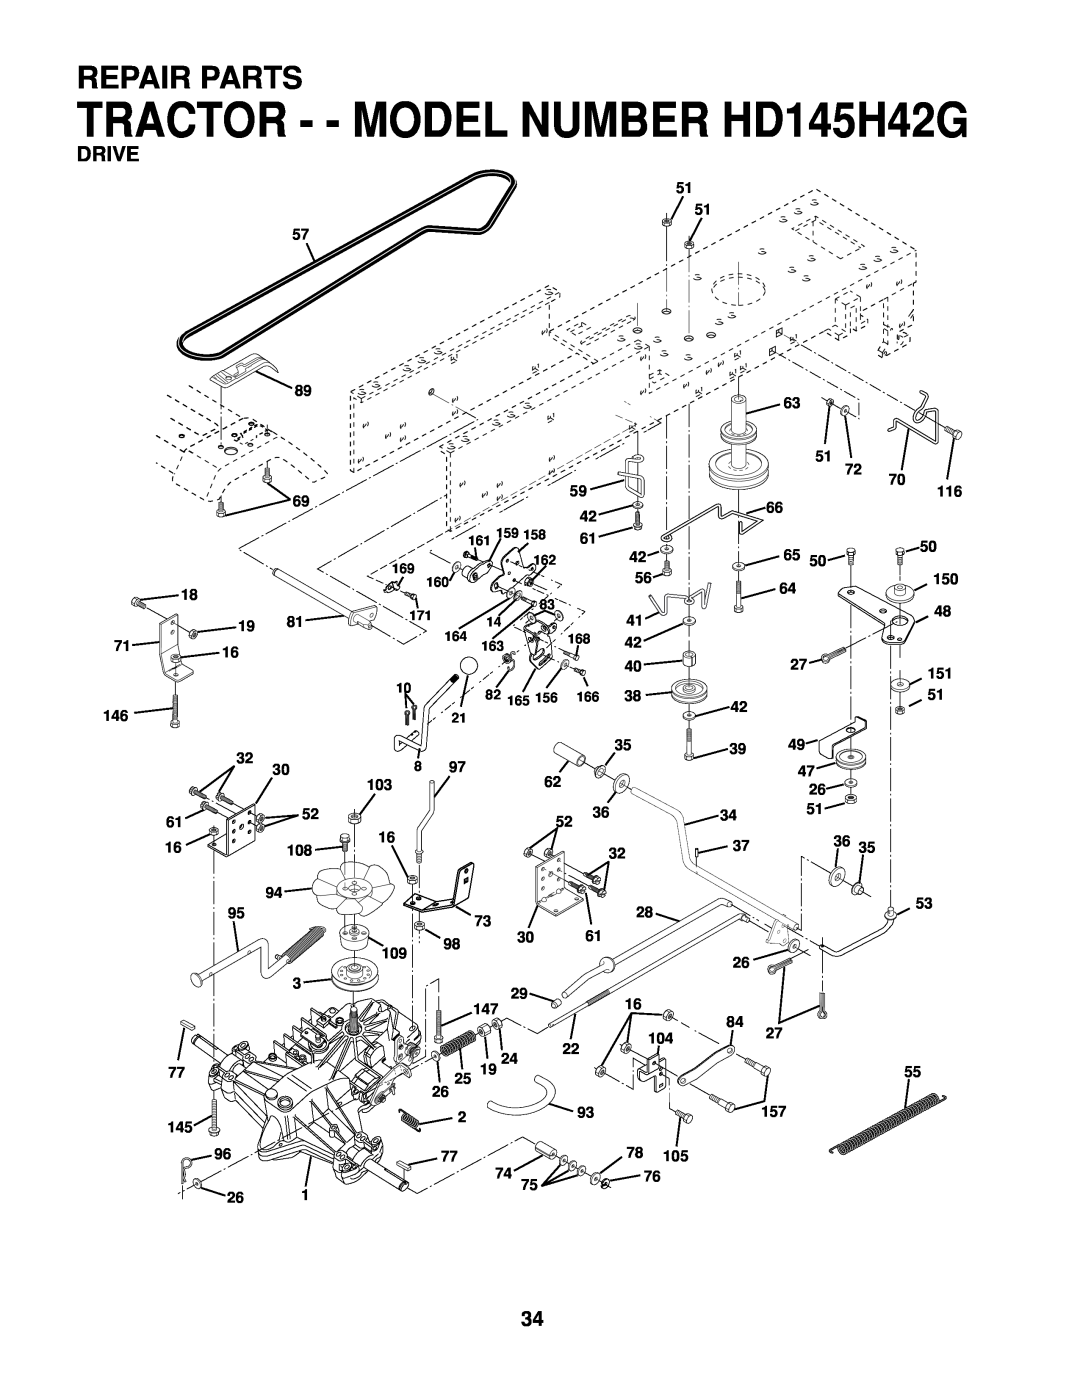 Poulan 161608 owner manual TRACTOR - - MODEL NUMBER HD145H42G, Repair Parts, Drive 